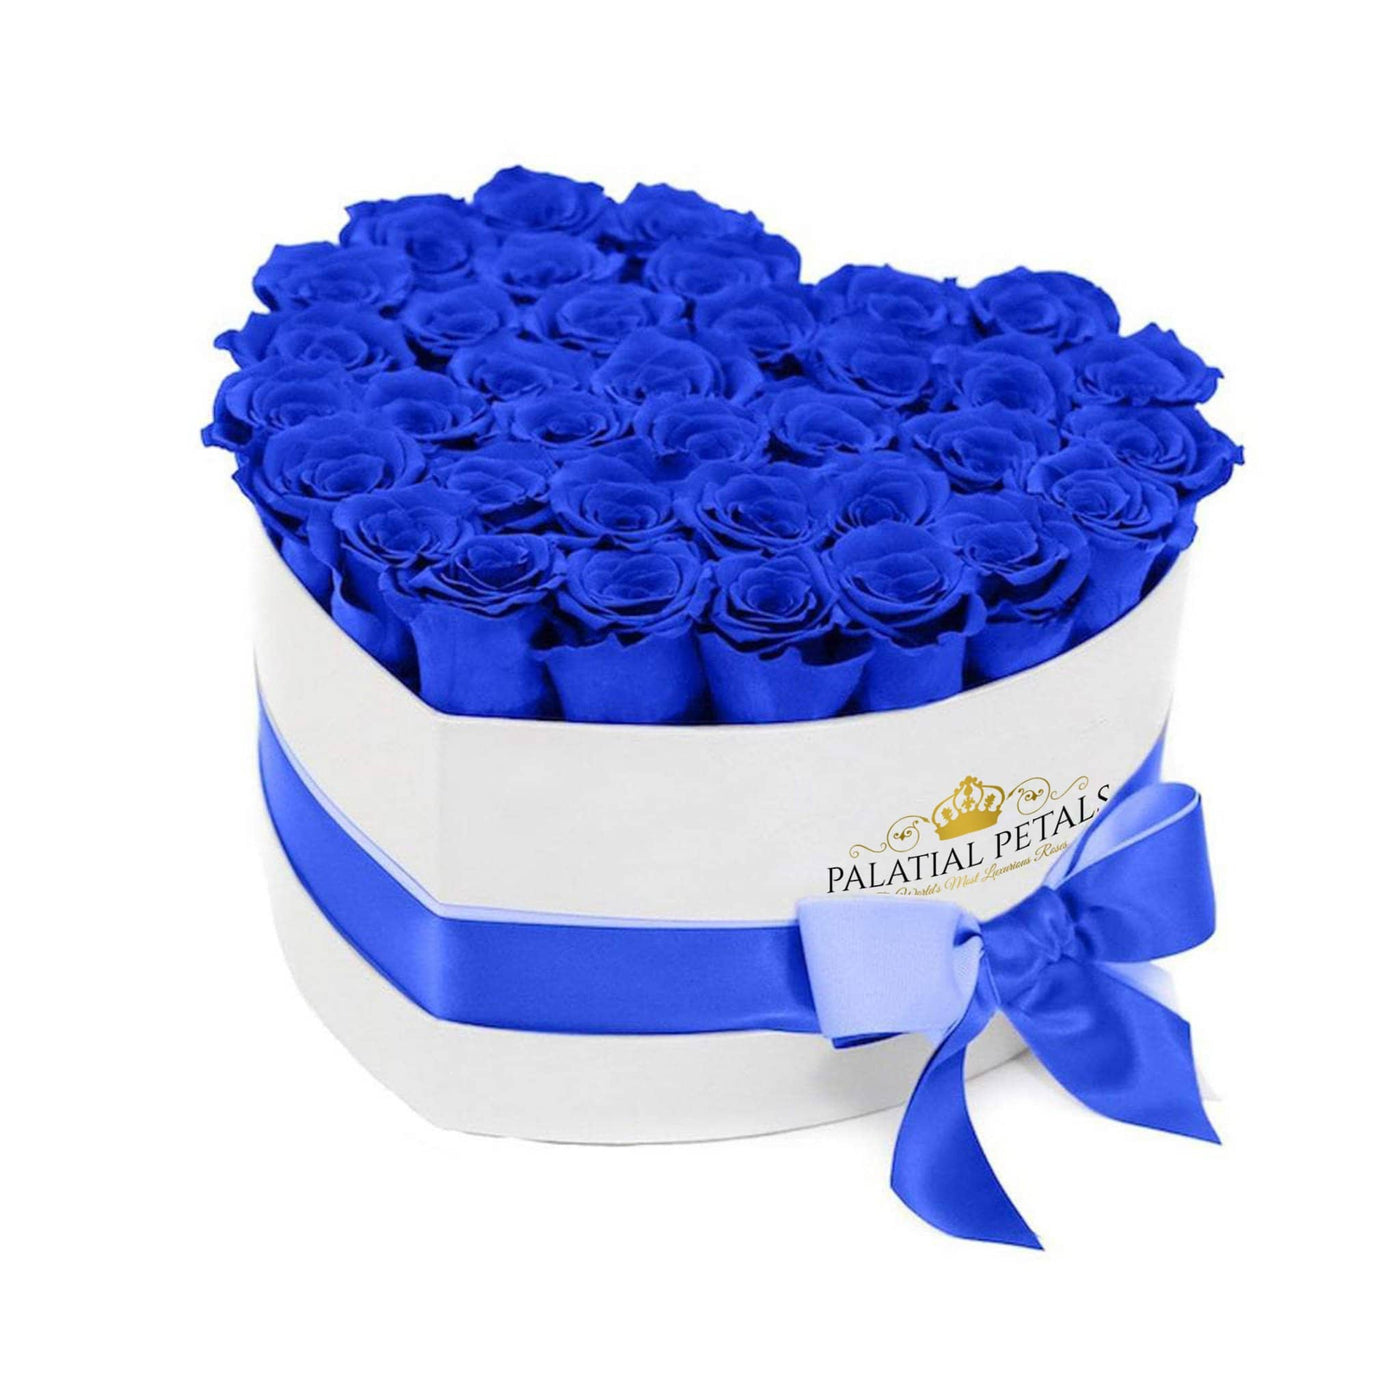 Sapphire Blue Roses That Last A Year - Love Heart Box